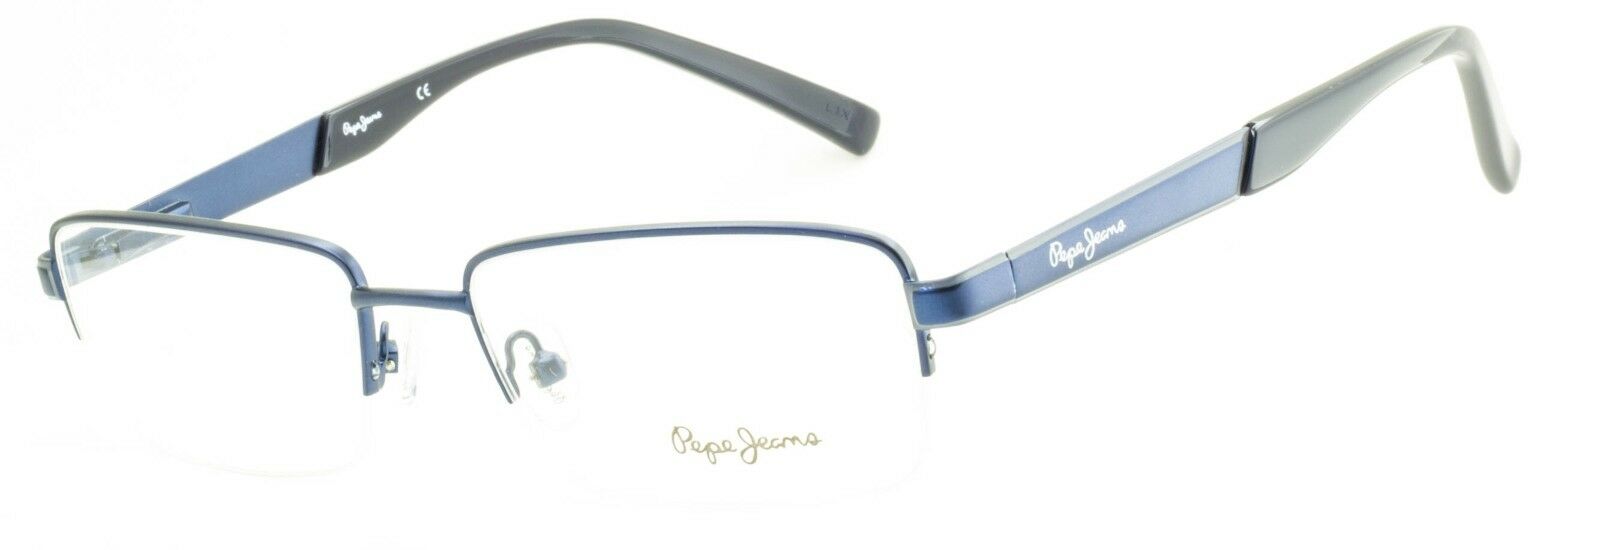 PEPE JEANS Nolan PJ1140 col C4 Eyewear FRAMES NEW Glasses Eyeglasses RX Optical